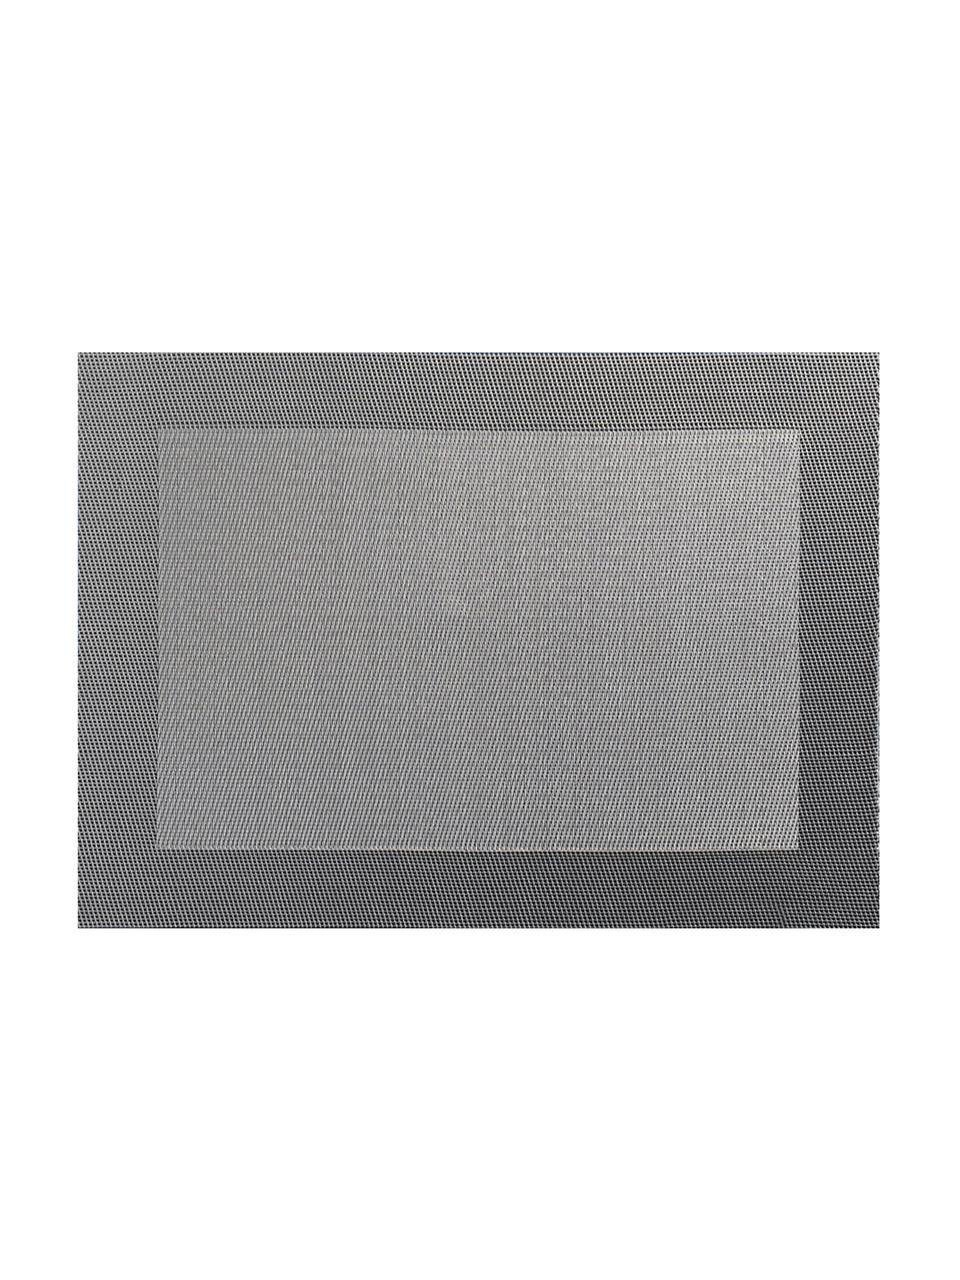 Kunststoff-Tischsets Trefl, 2 Stück, Kunststoff (PVC), Grautöne, B 33 x L 46 cm